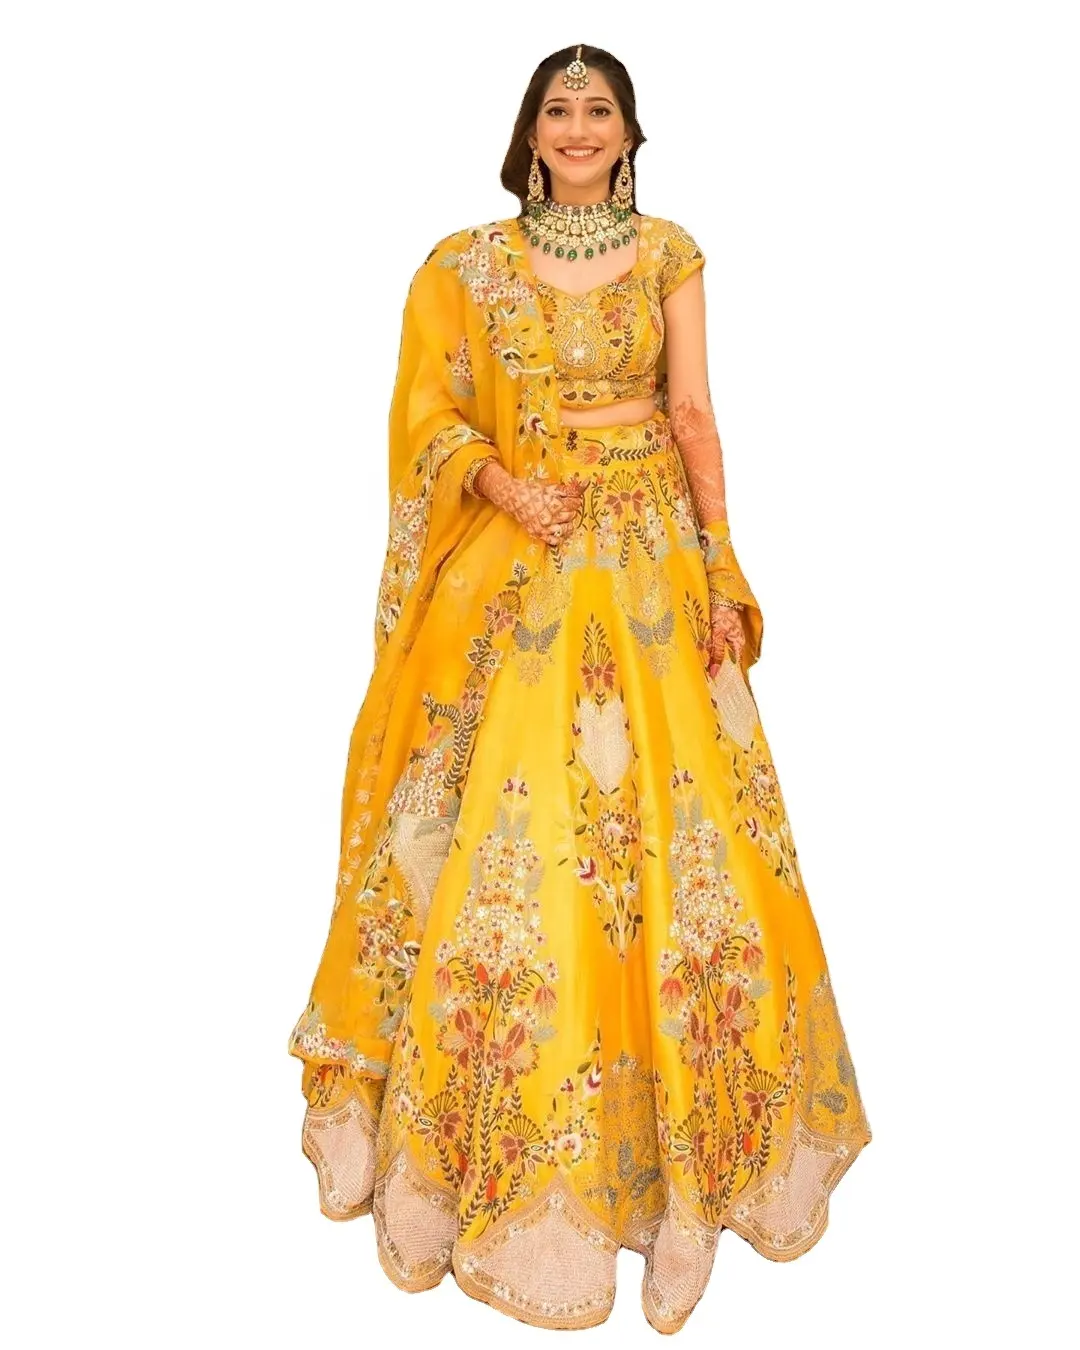 New Arrivals Mehndi Special Yellow Lehenga Choli Bridal Wedding Dress Lehnga Choli Ethnic Clothing for Women 2023 collection